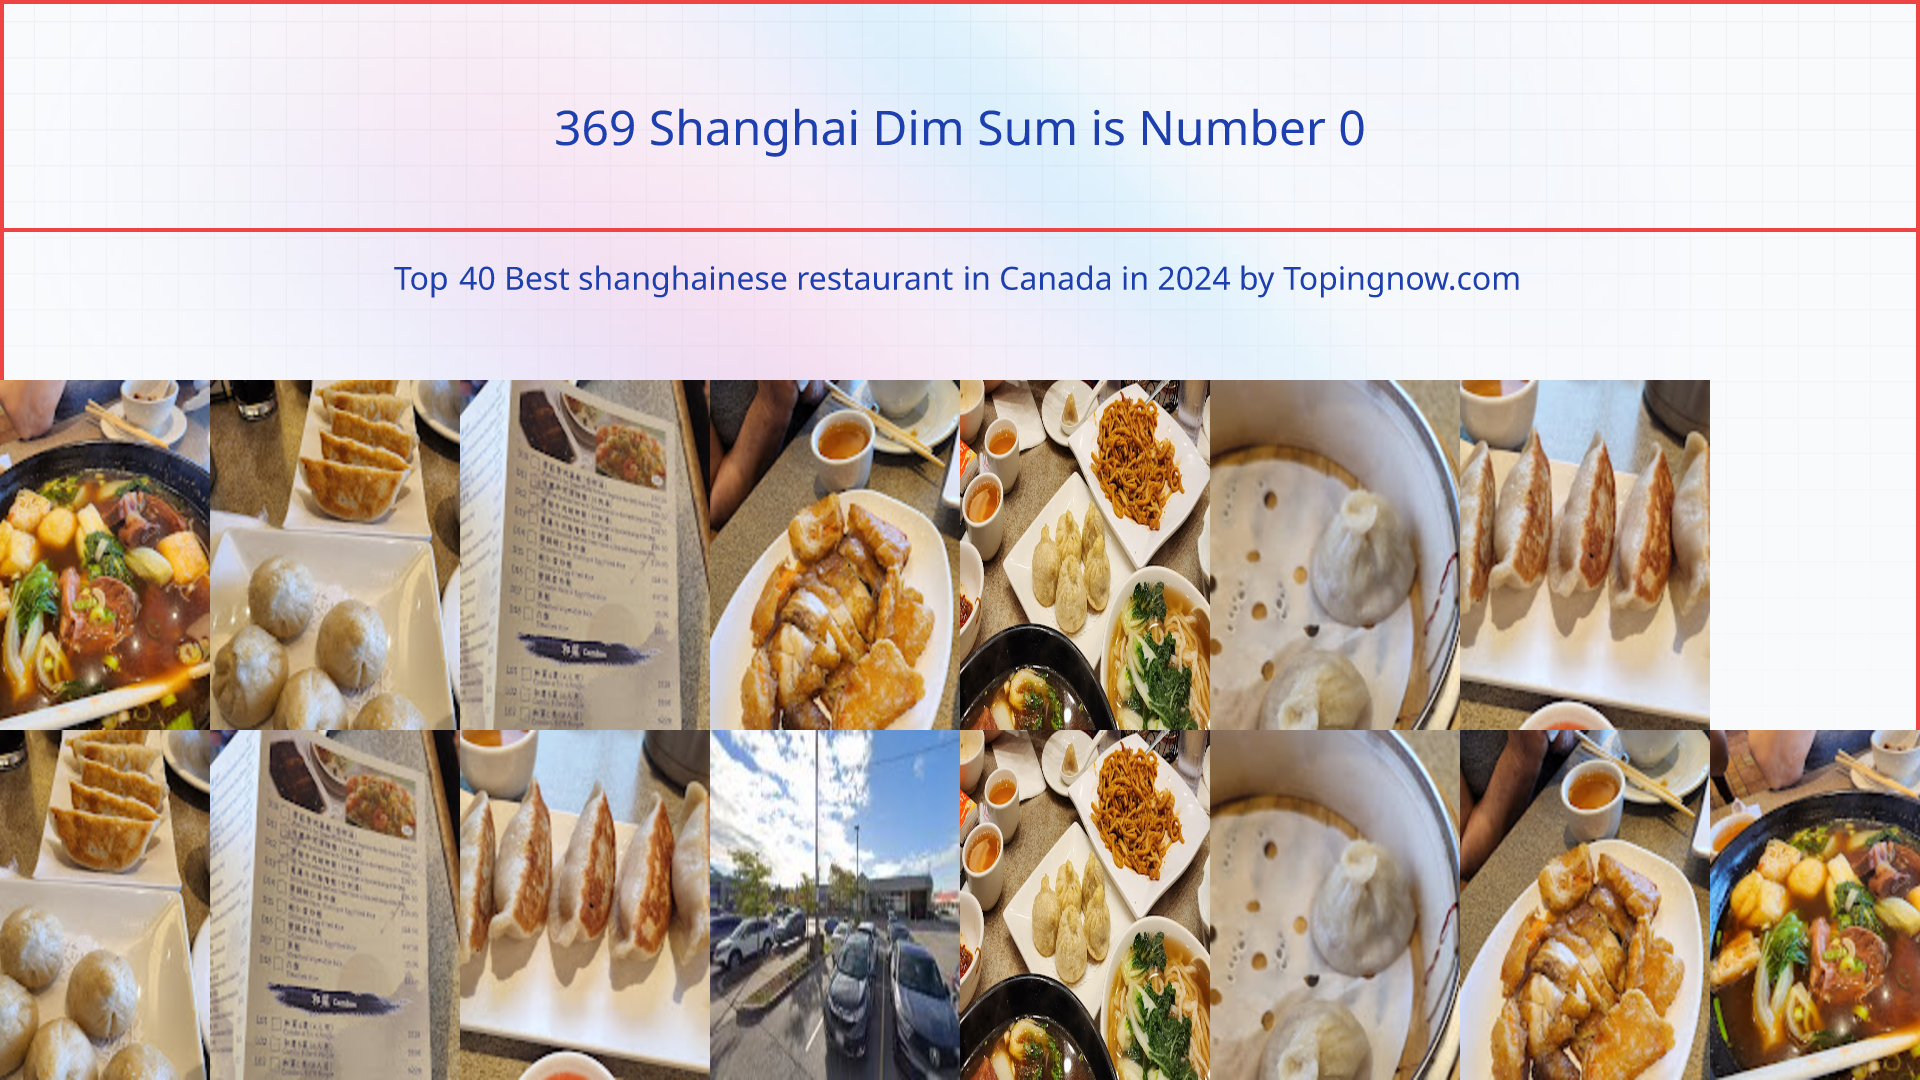 369 Shanghai Dim Sum: Top 40 Best shanghainese restaurant in Canada in 2024